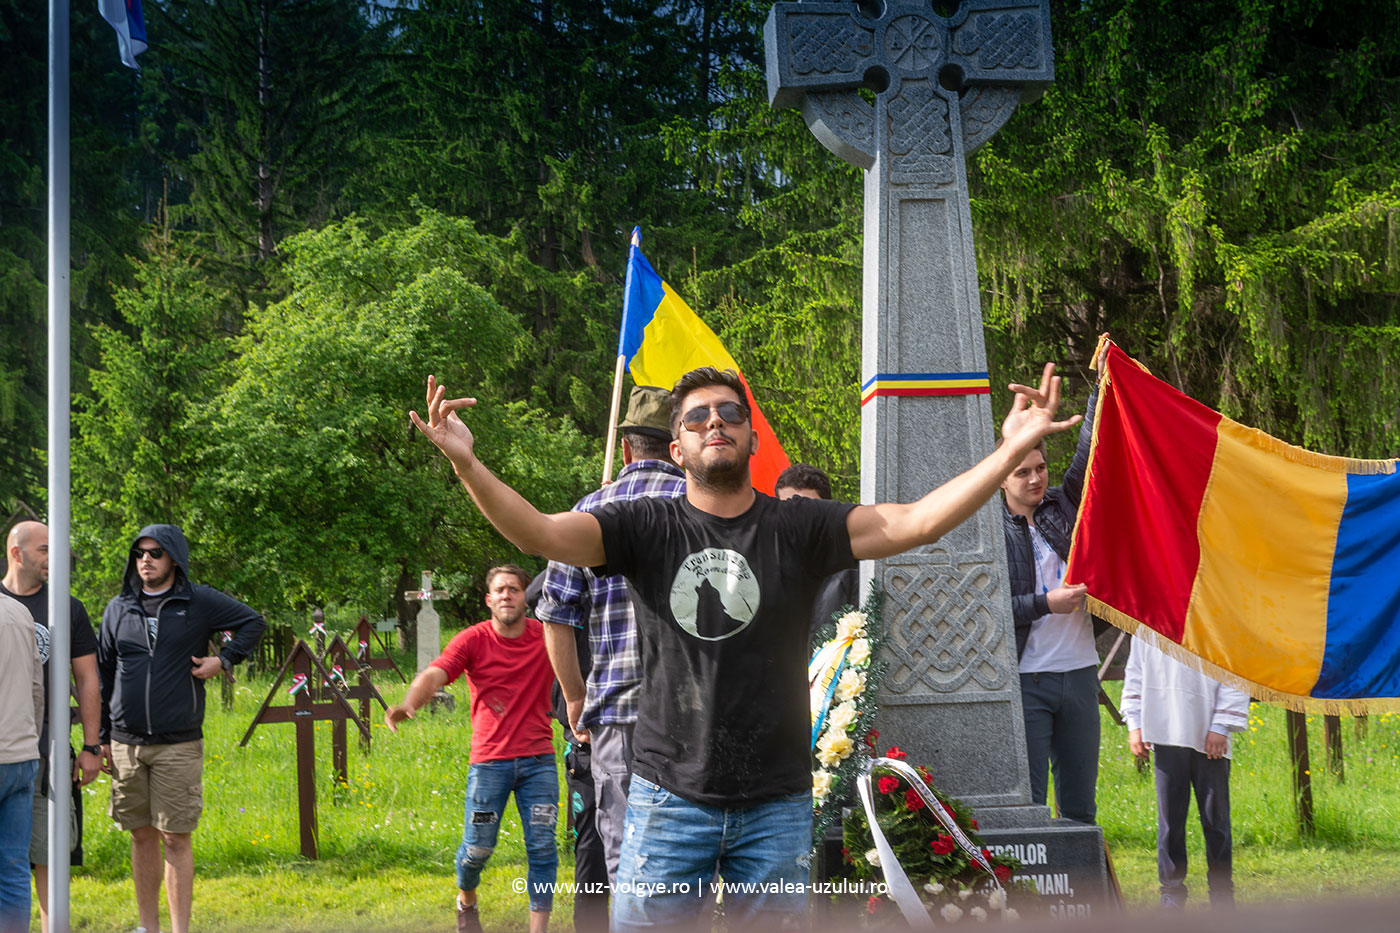 Rumänen beschädigen ungarische Grabstätte im Soldatenfriedhof 